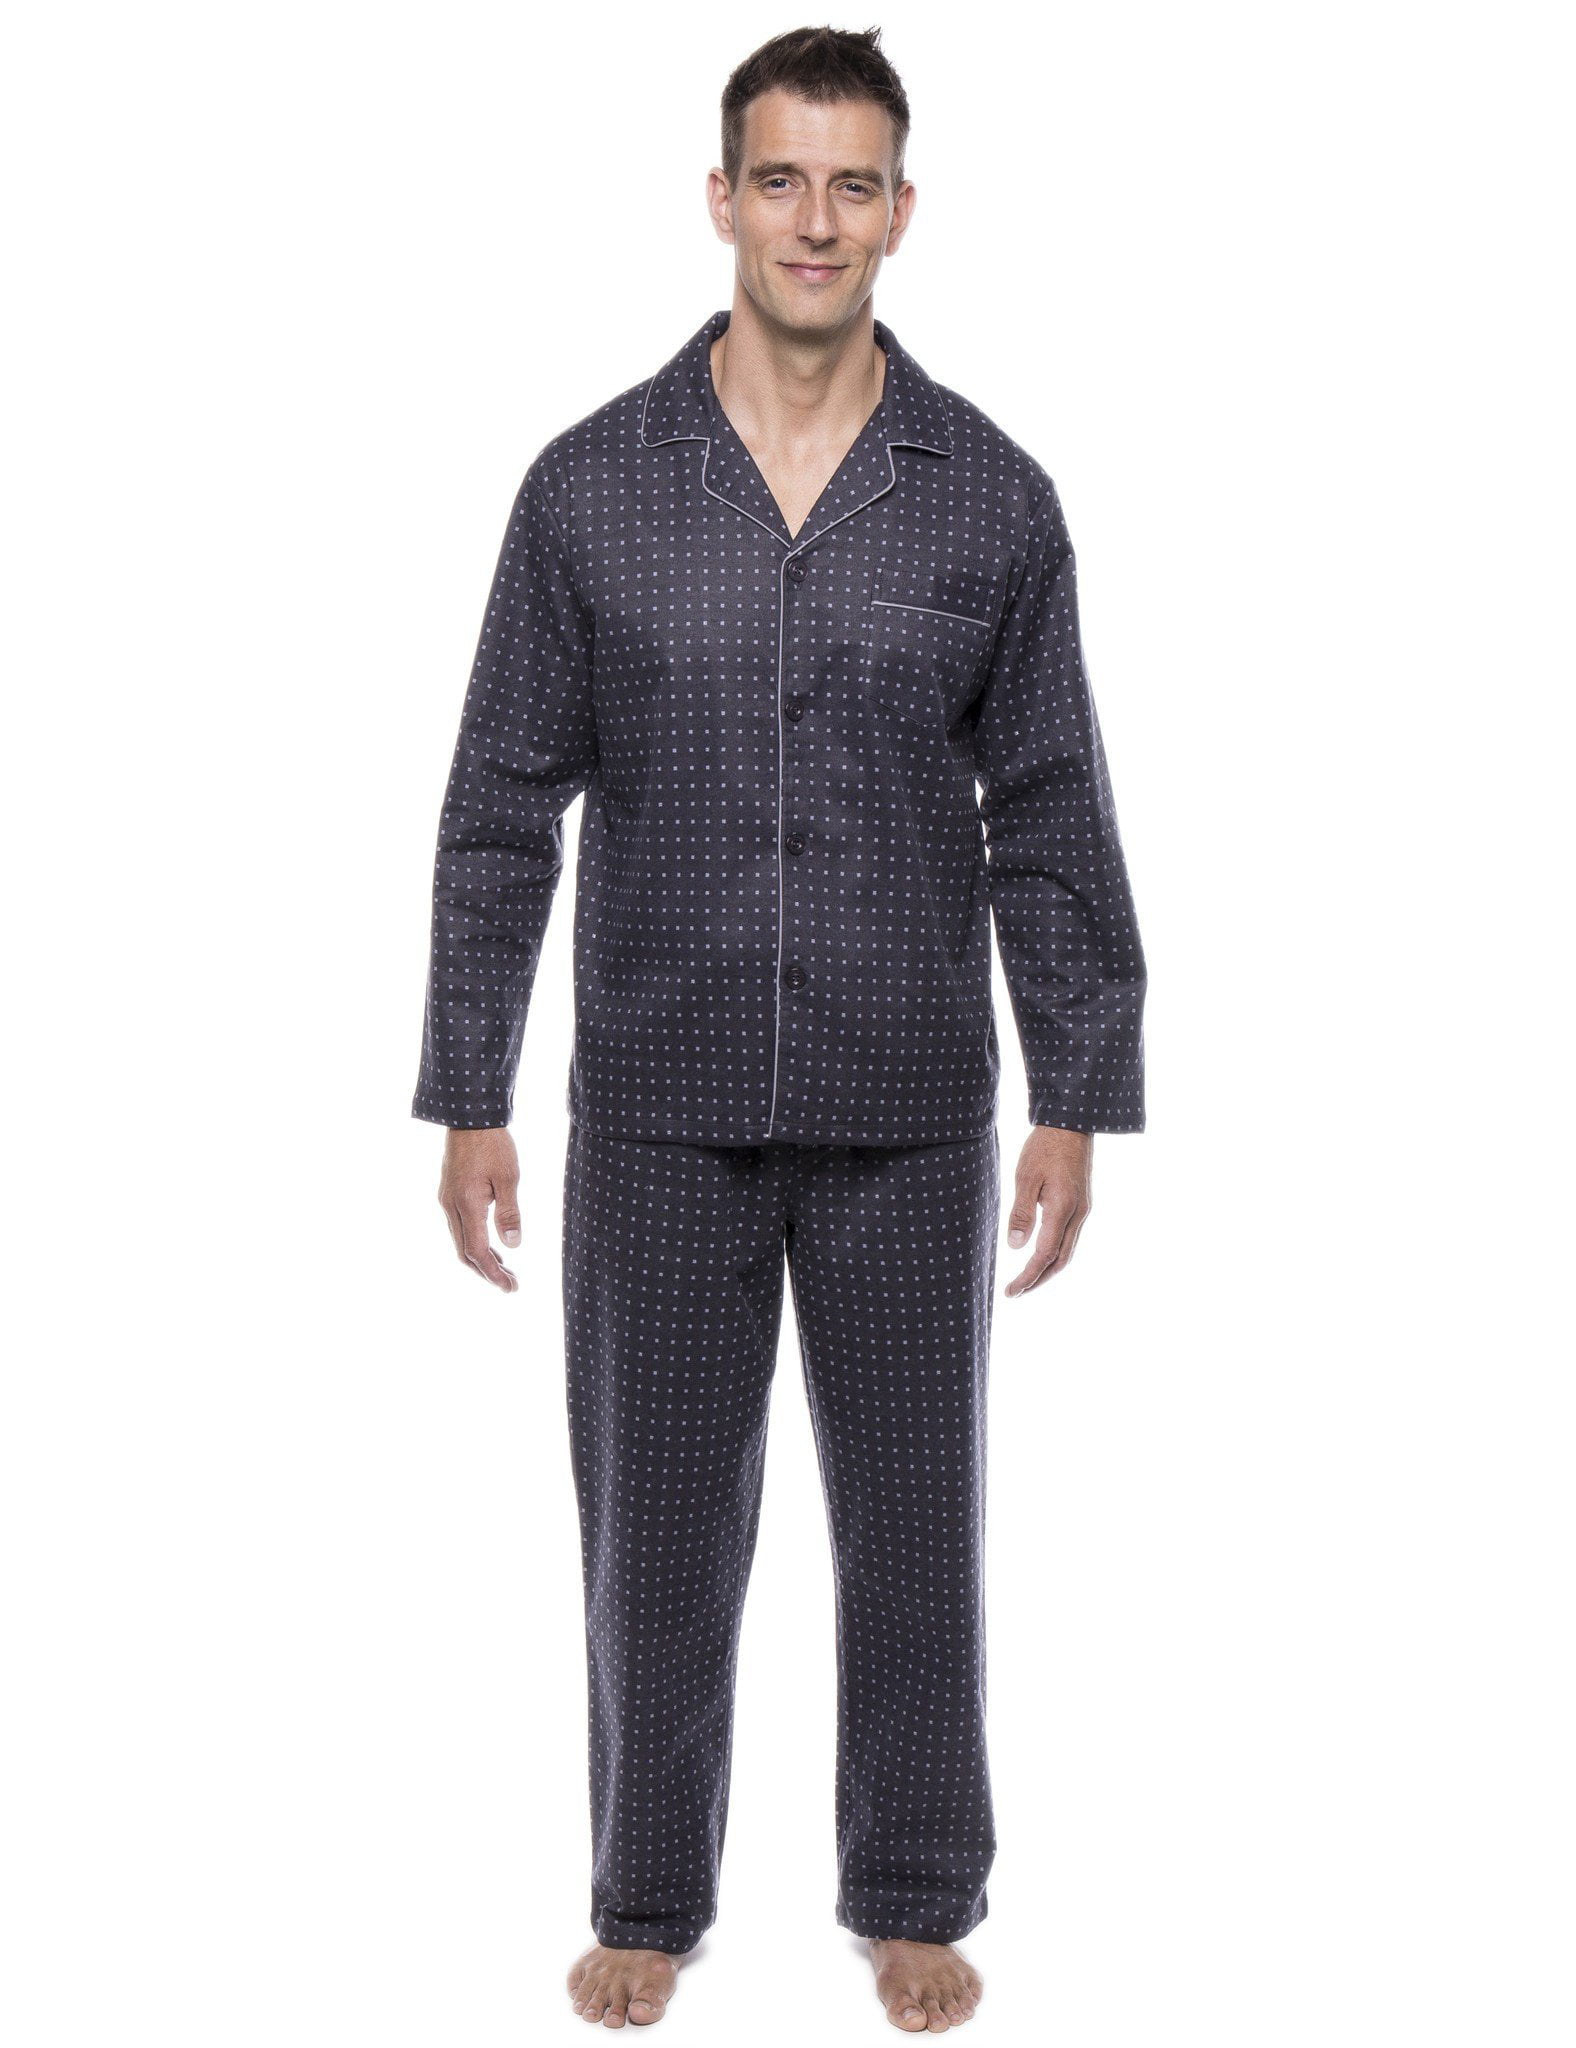 TEN WEST Apparel Mens Cotton Yarn Dyed Short Sleeve Short Leg Printed Pajamas Set